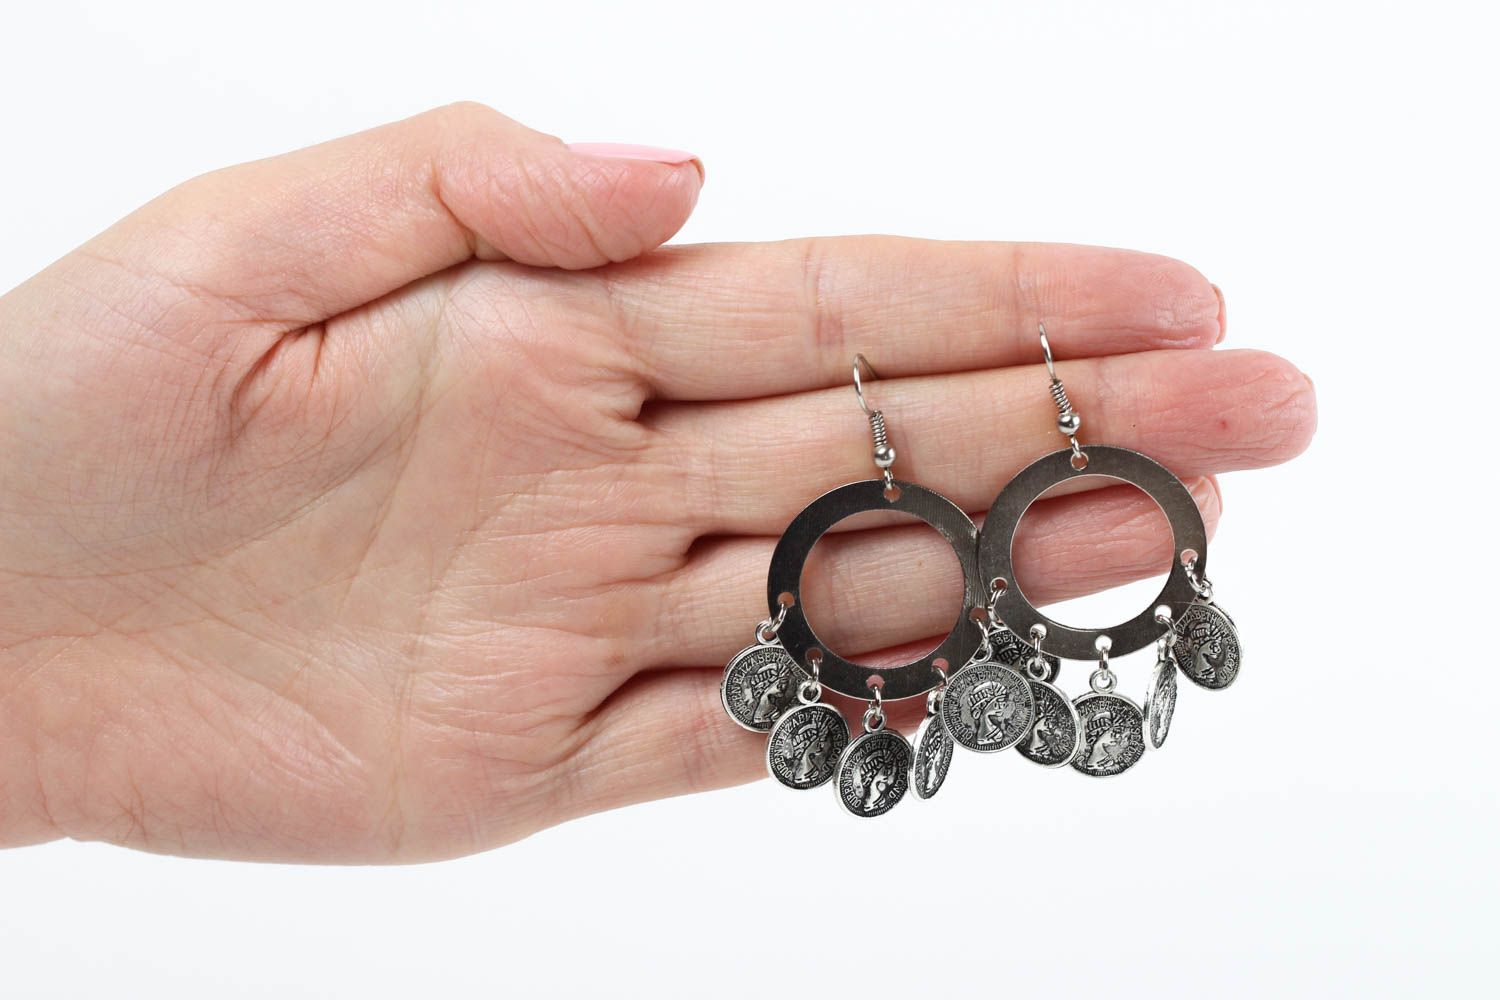 Handmade earrings designer jewelry unusual accessory gift ideas earrings for her photo 5